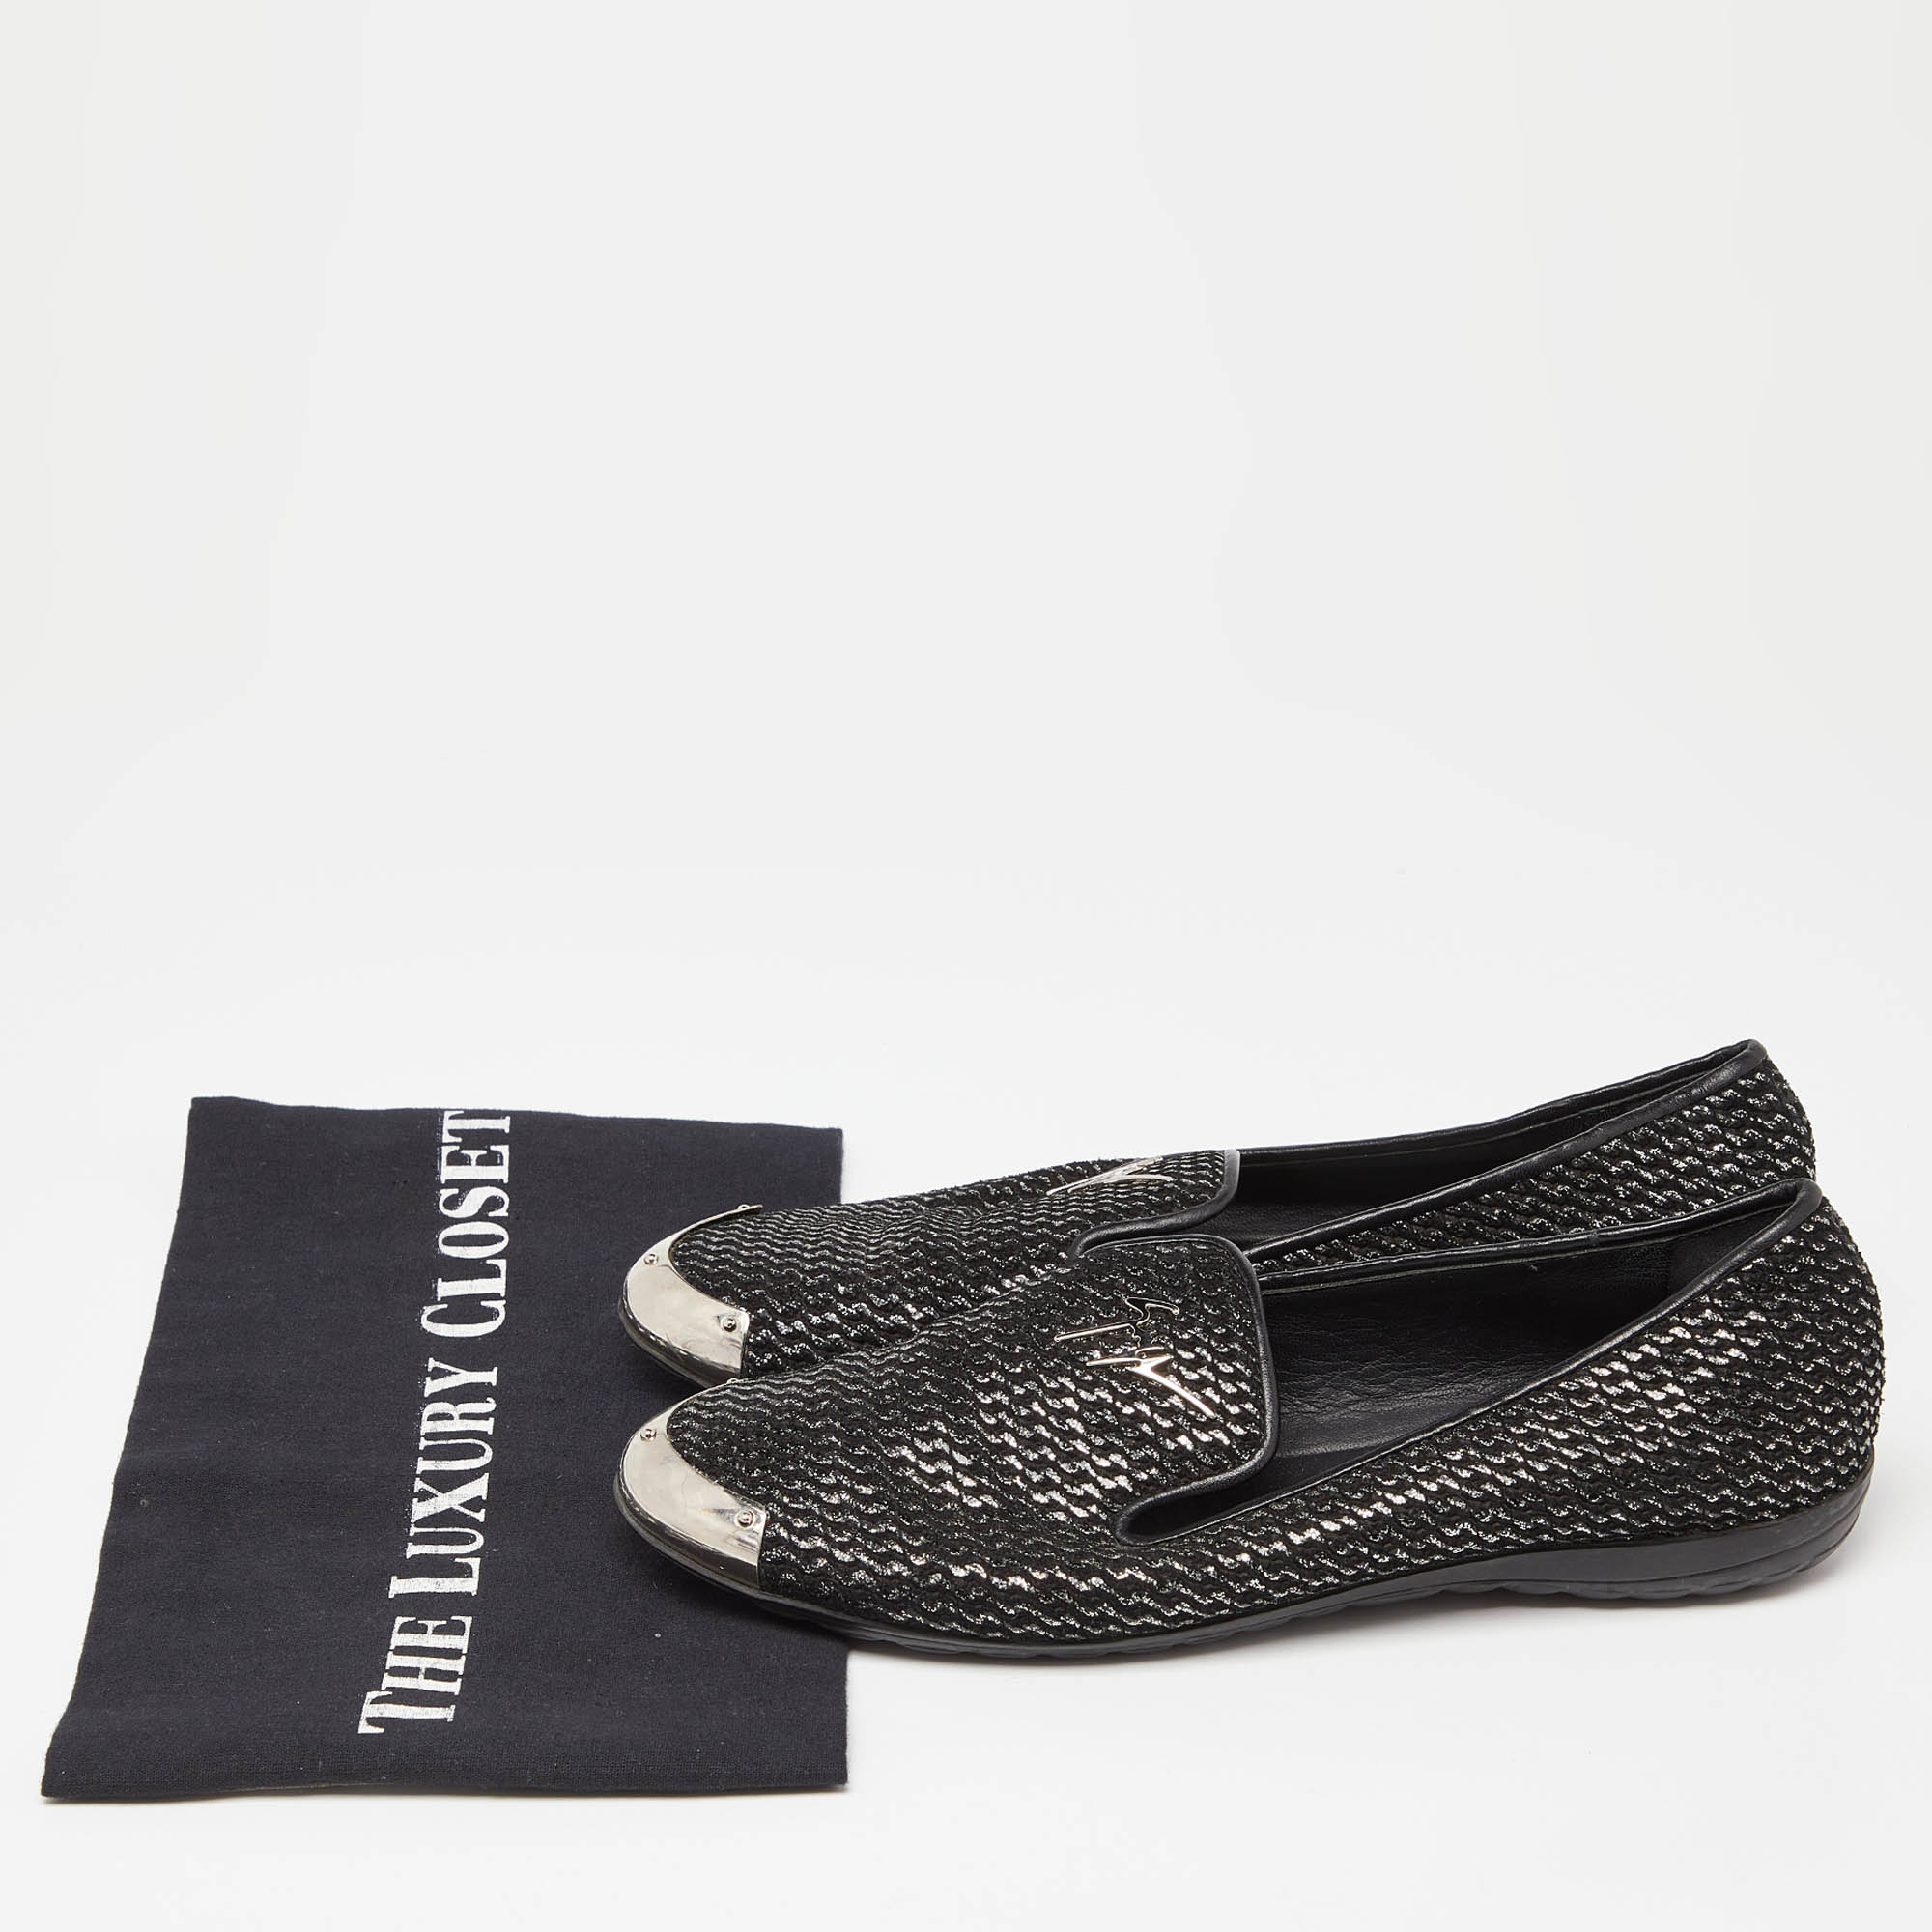 Giuseppe Zanotti Black Glitter Leather Slip On Smoking Slippers Size 37.5